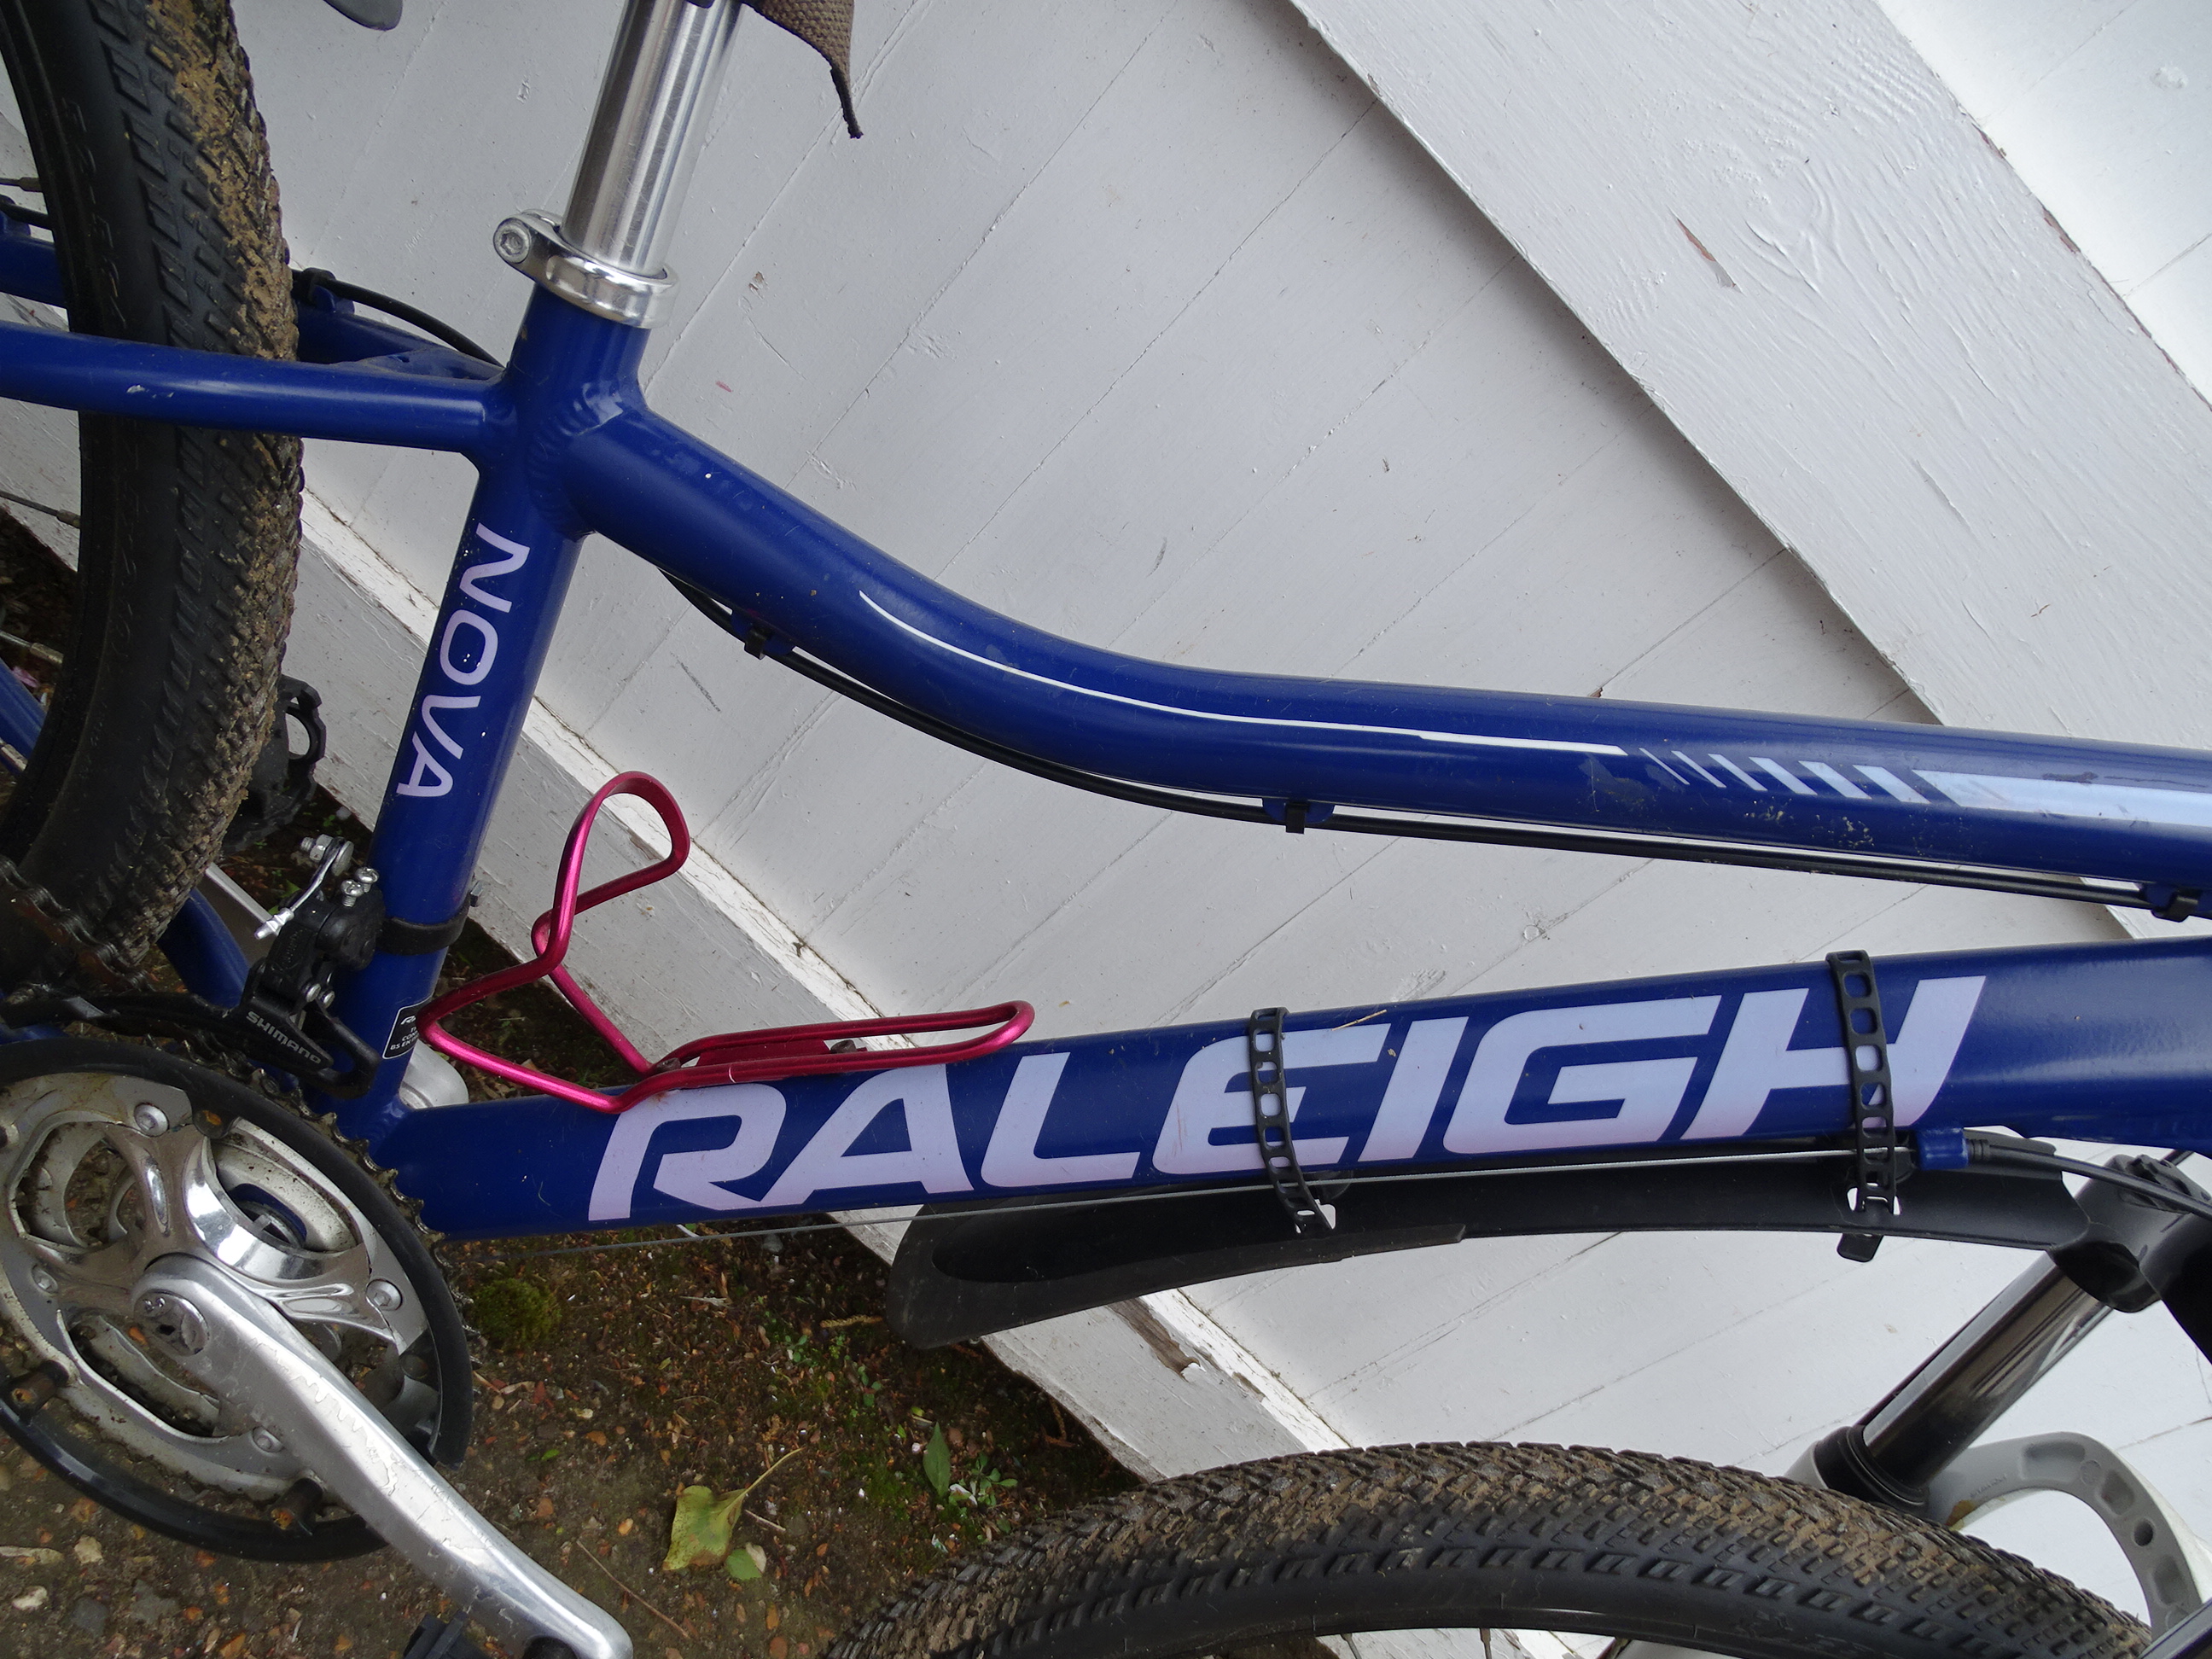 Raleigh ladies mountain bike - Image 2 of 2